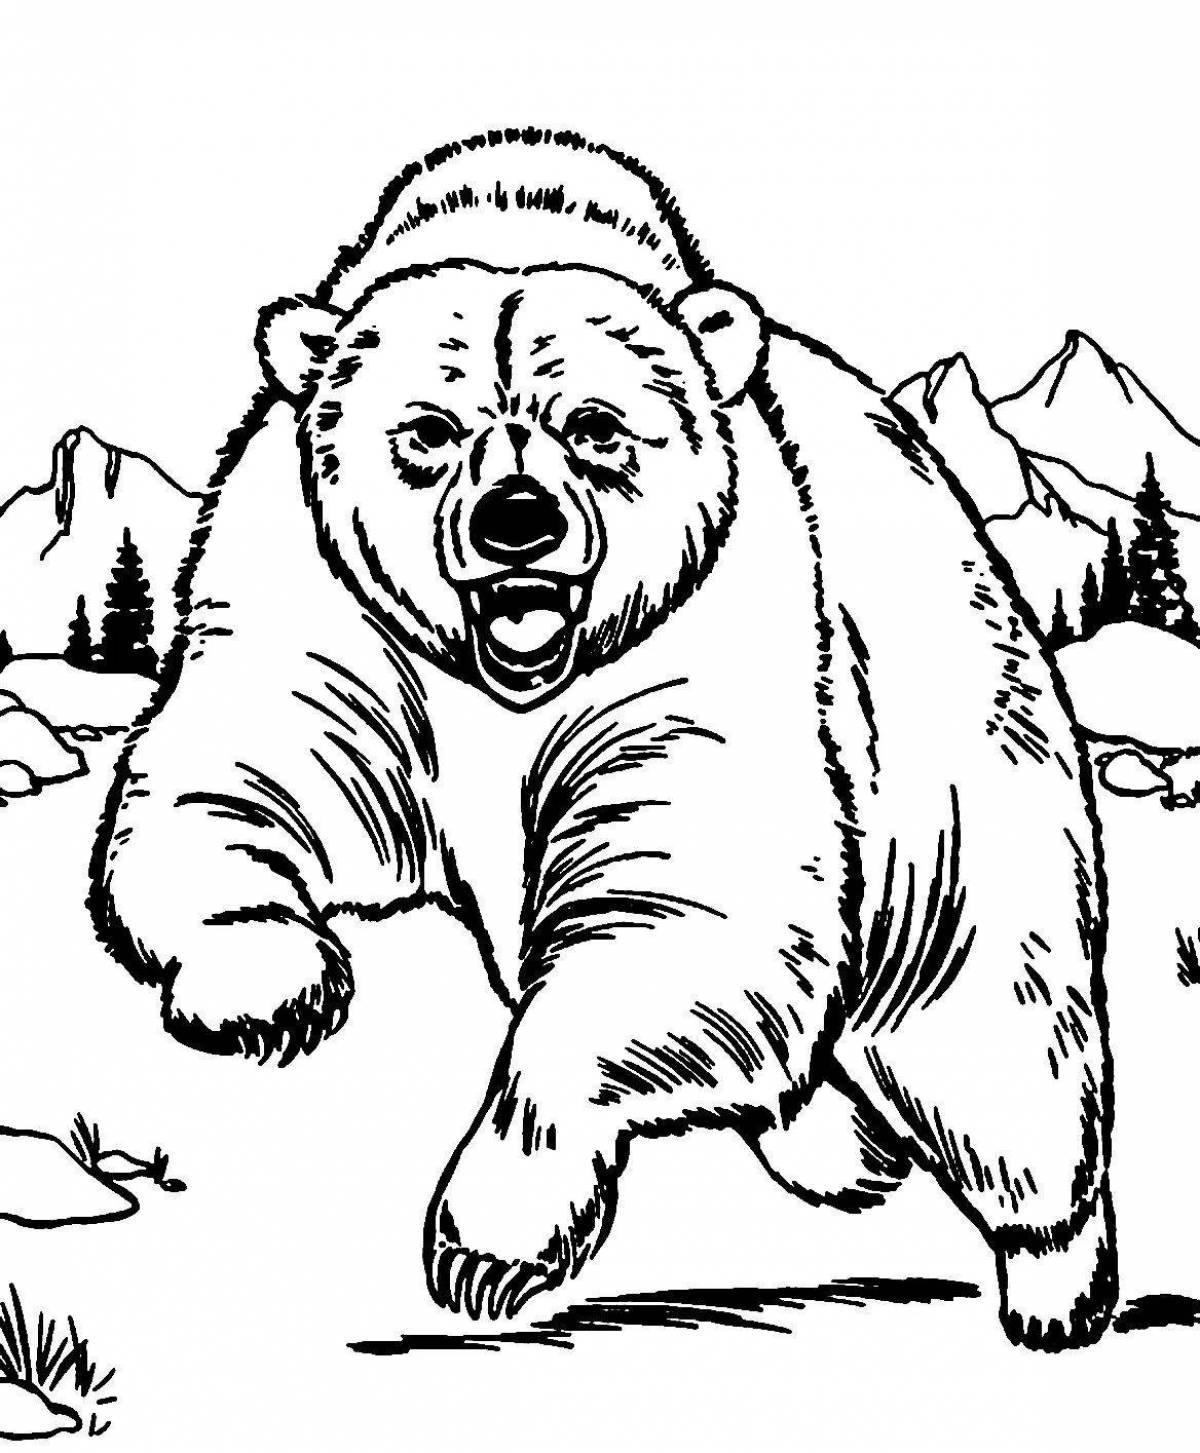 Coloring a joyful brown bear for children